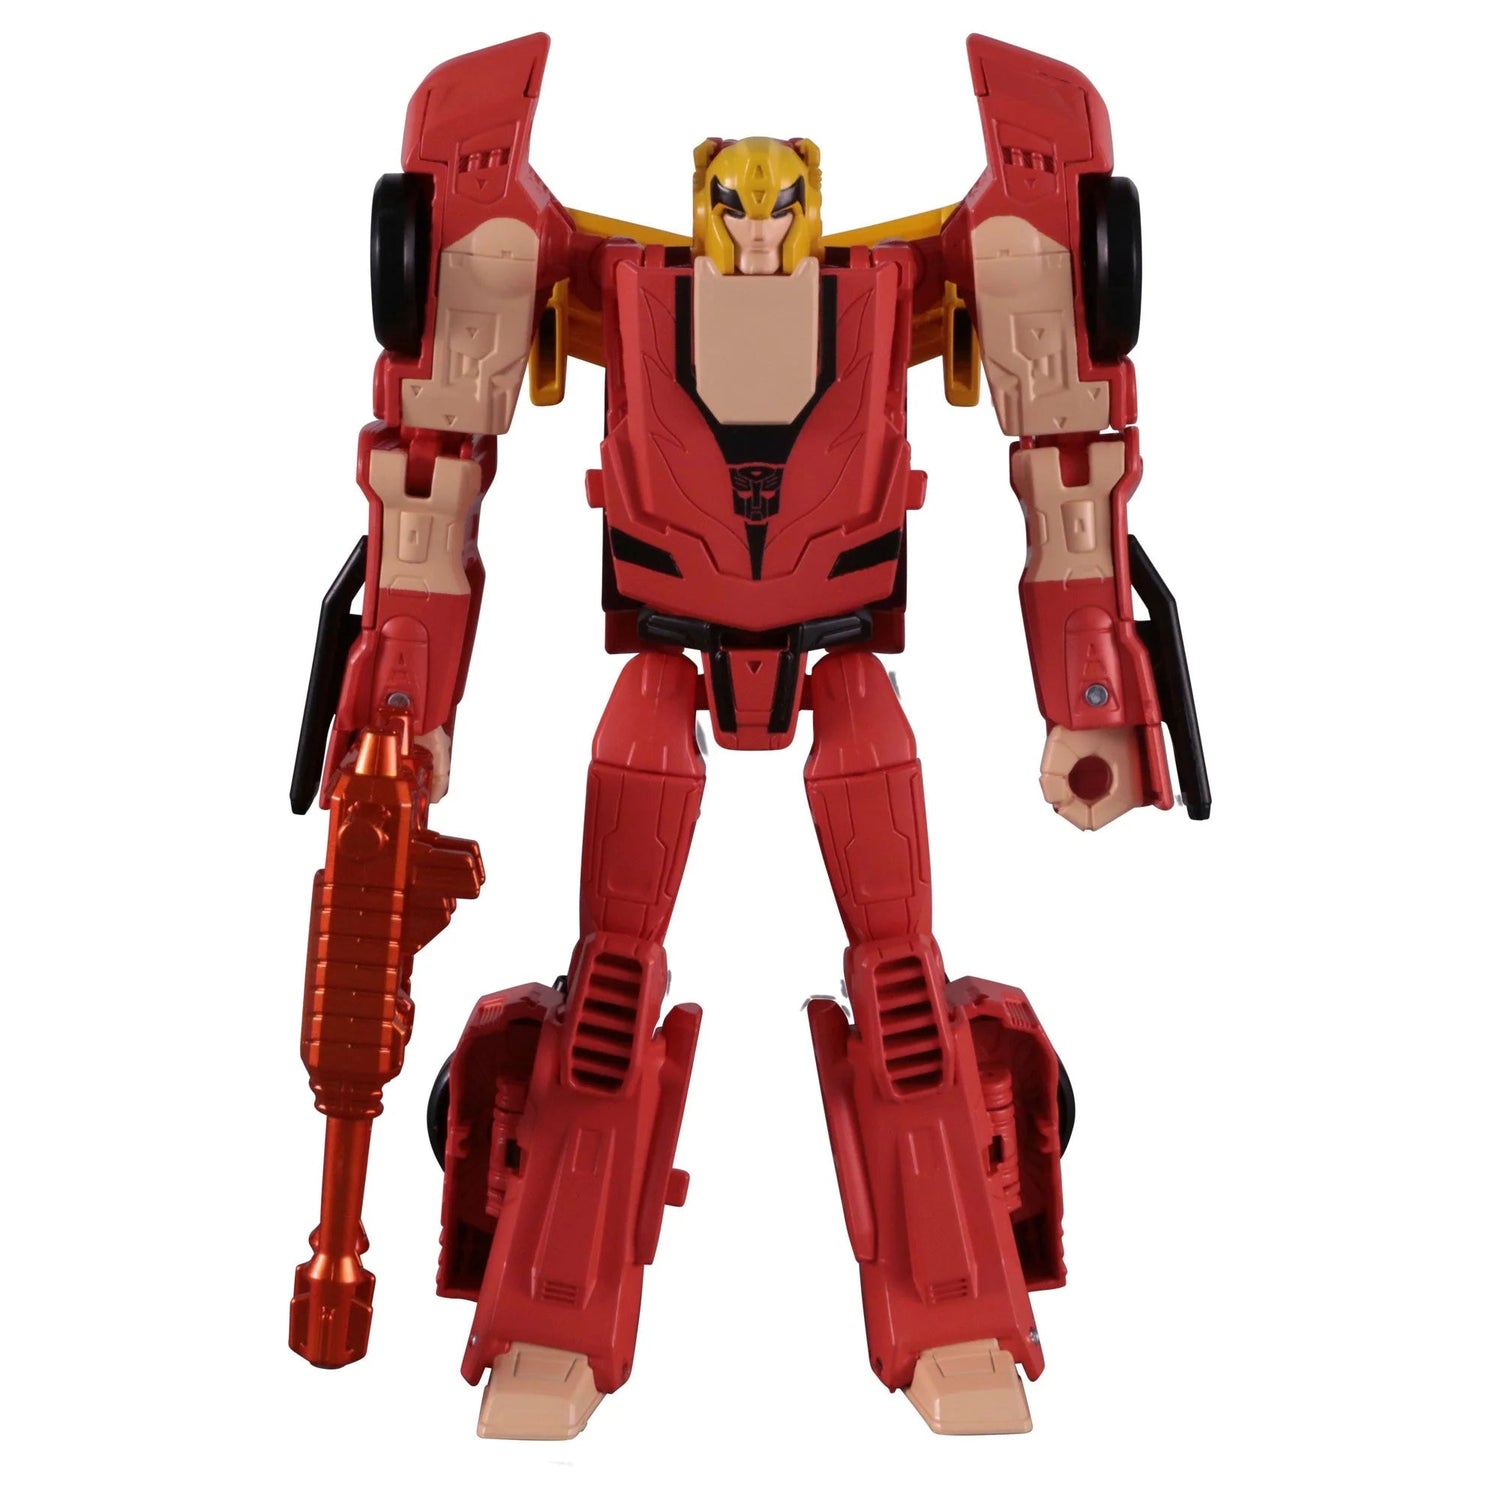 Transformers Collaborative: Street Fighter II Mash-Up, Autobot Hot Rod [Ken] vs. Arcee [Chun-Li] Hasbro